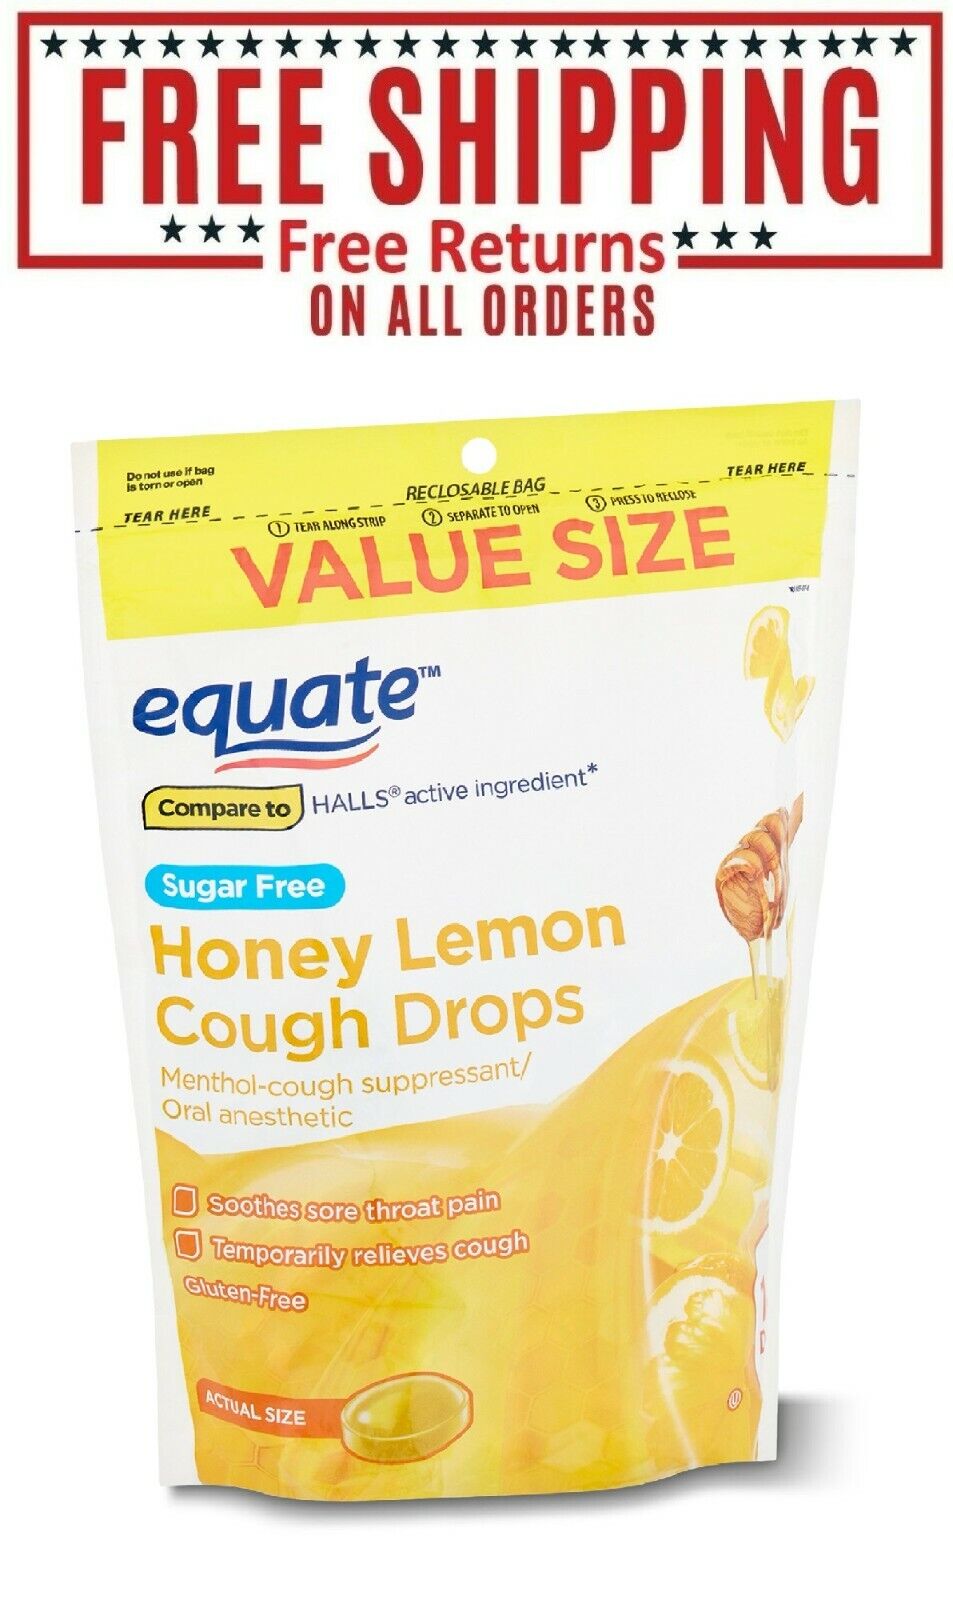 Equate Sugar Free Honey Lemon Cough Drops Value Size with Menthol, 140 Count